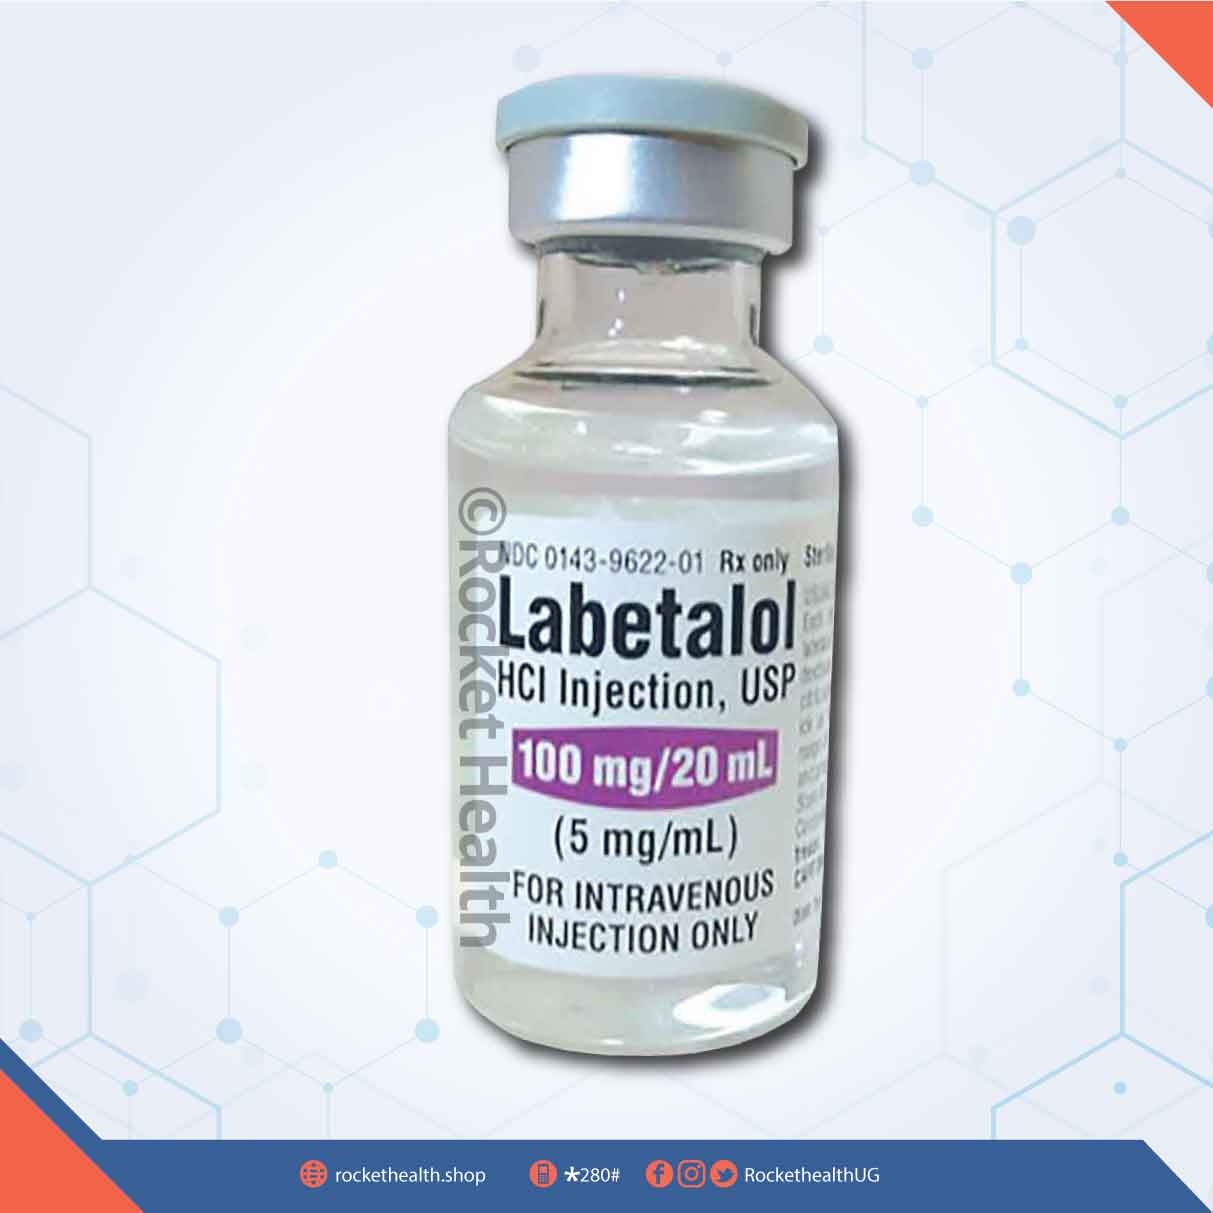 LABETALOL HYDROCHLORIDE injection, solution